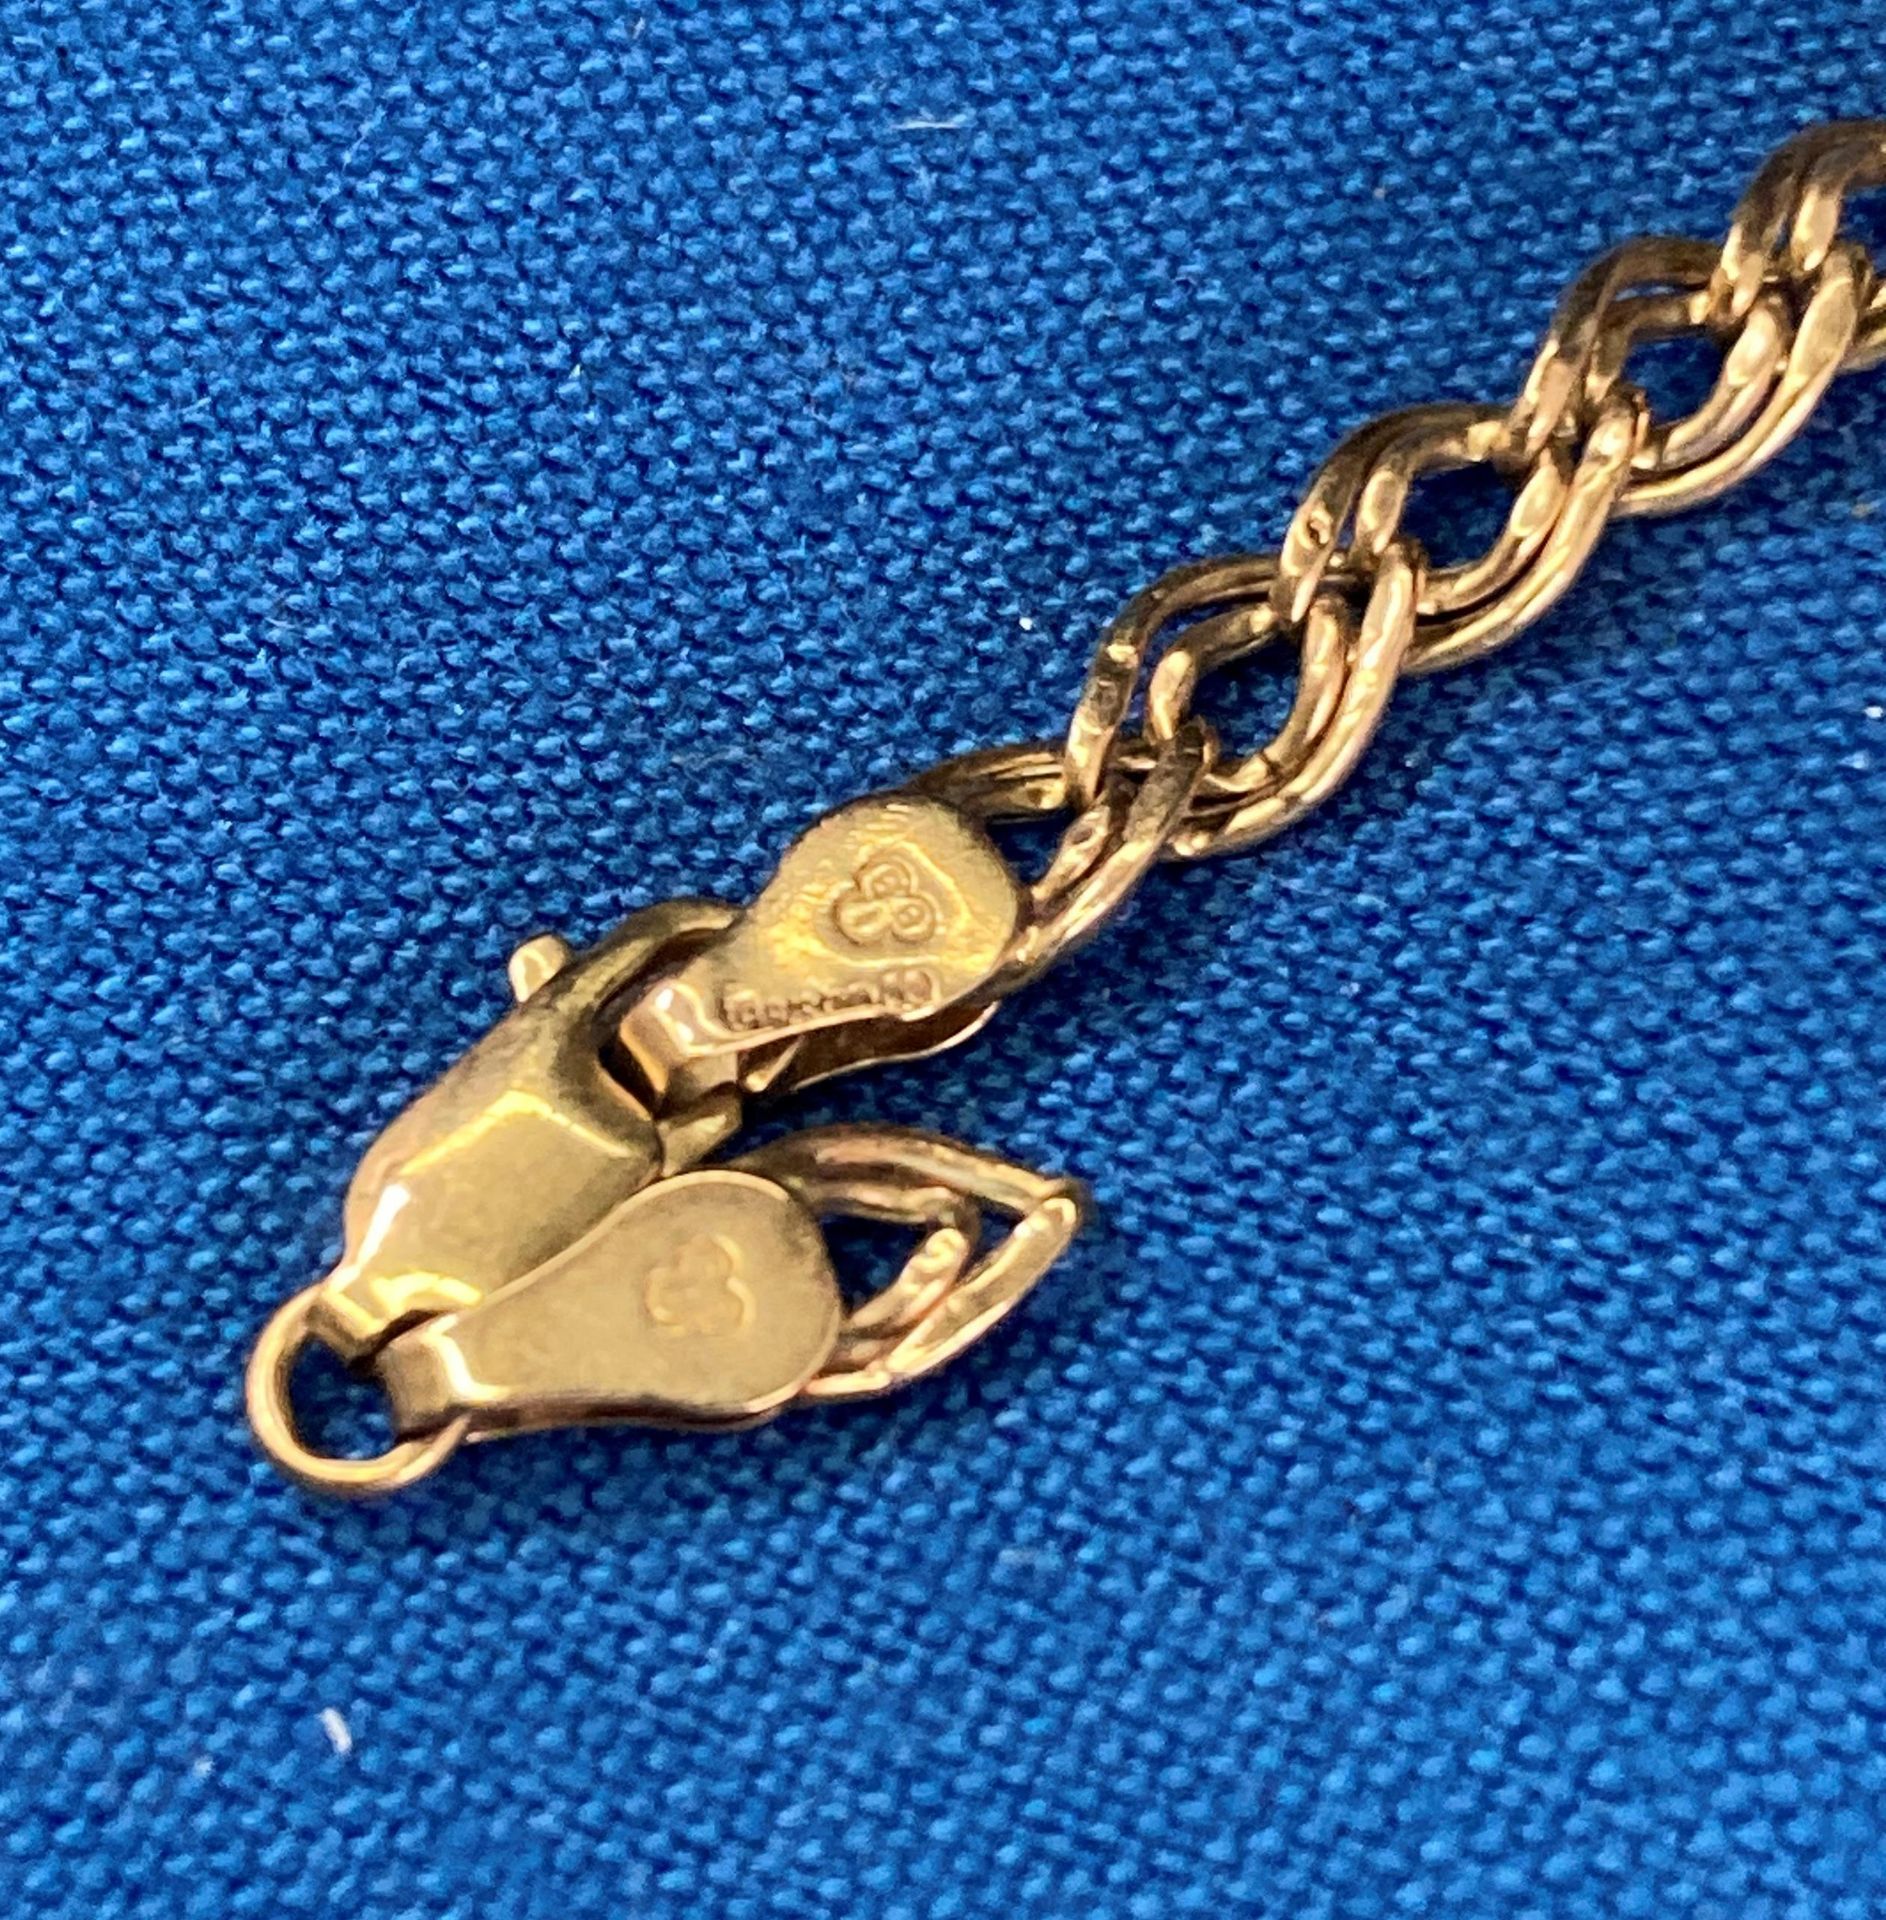 9ct gold (375) chain link bracelet with broken link (7" long), - Image 2 of 2